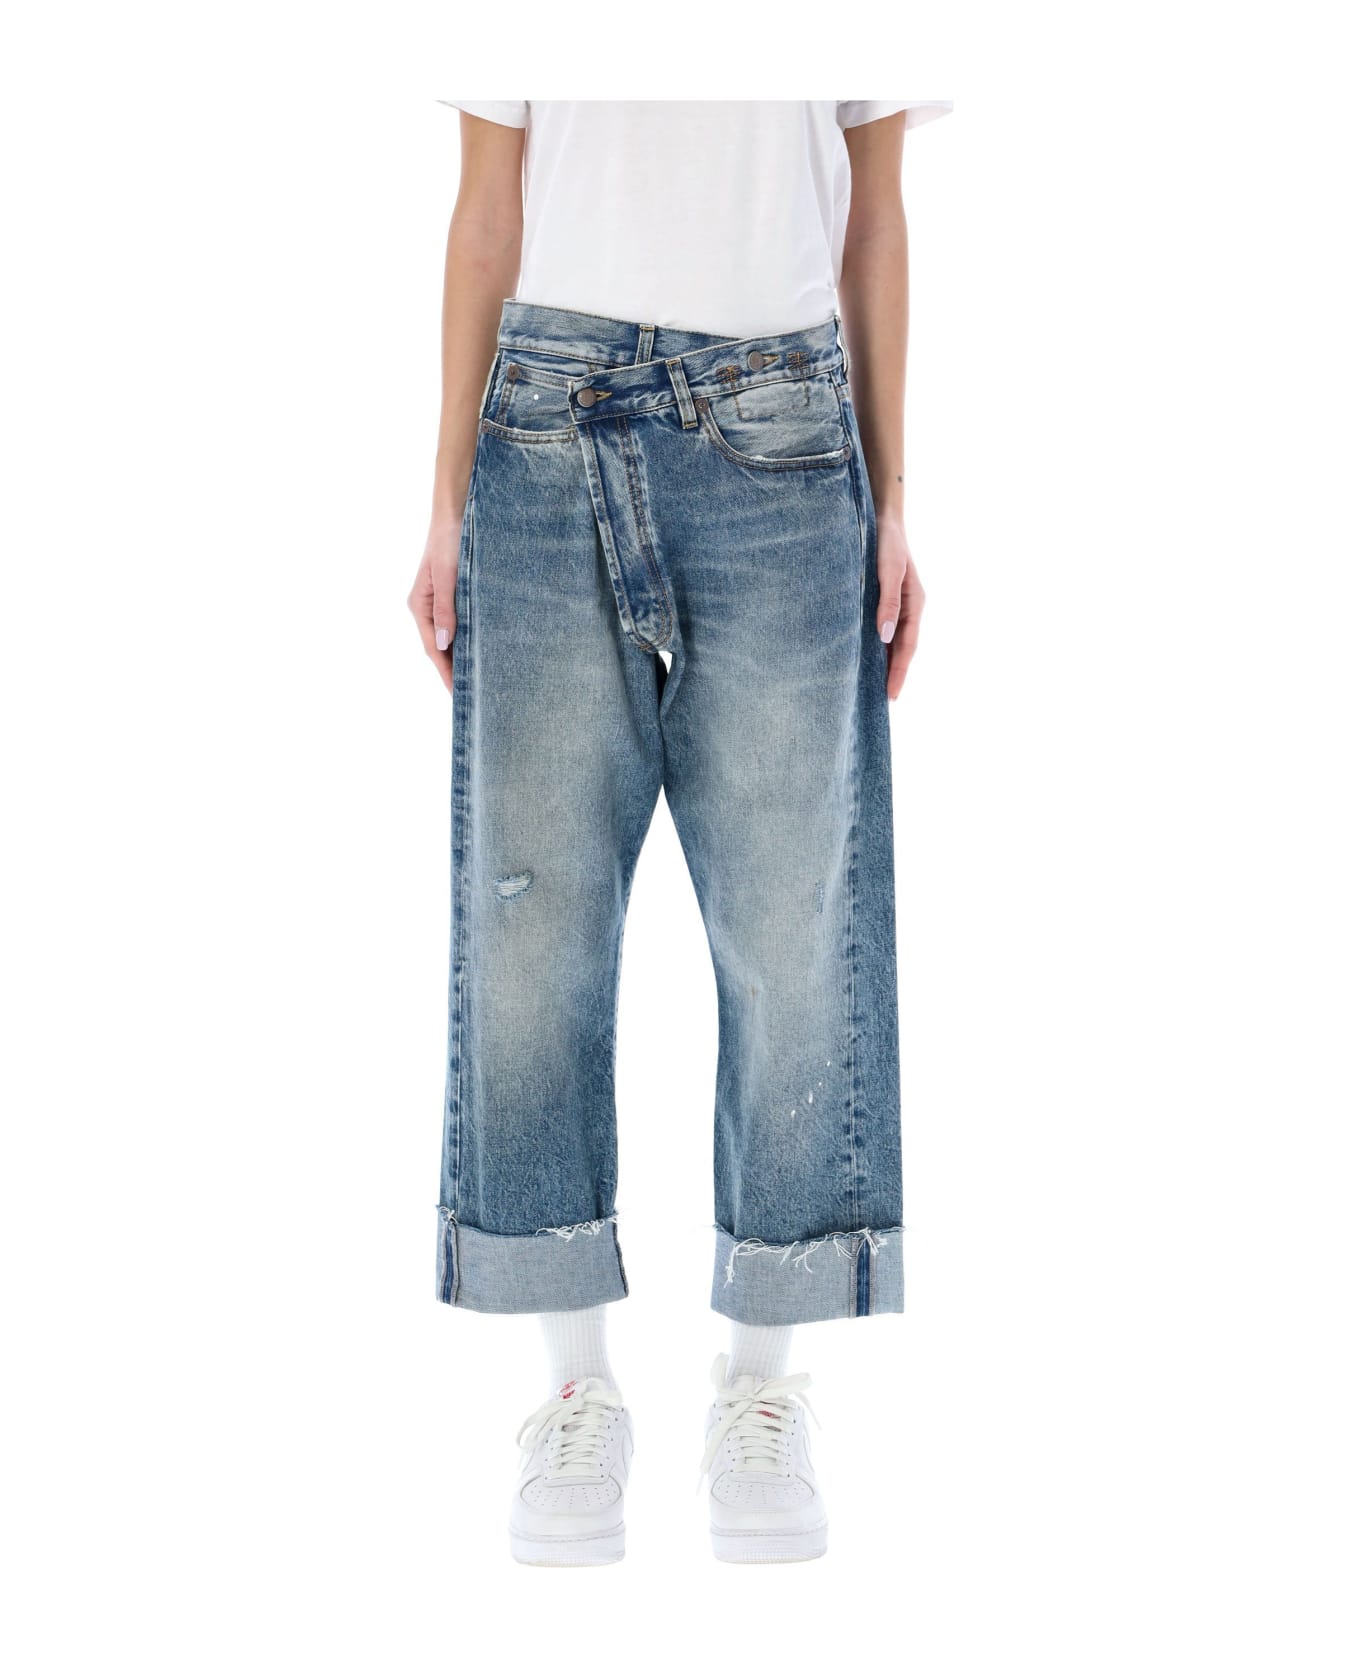 R13 Crossover Jeans - JASPER